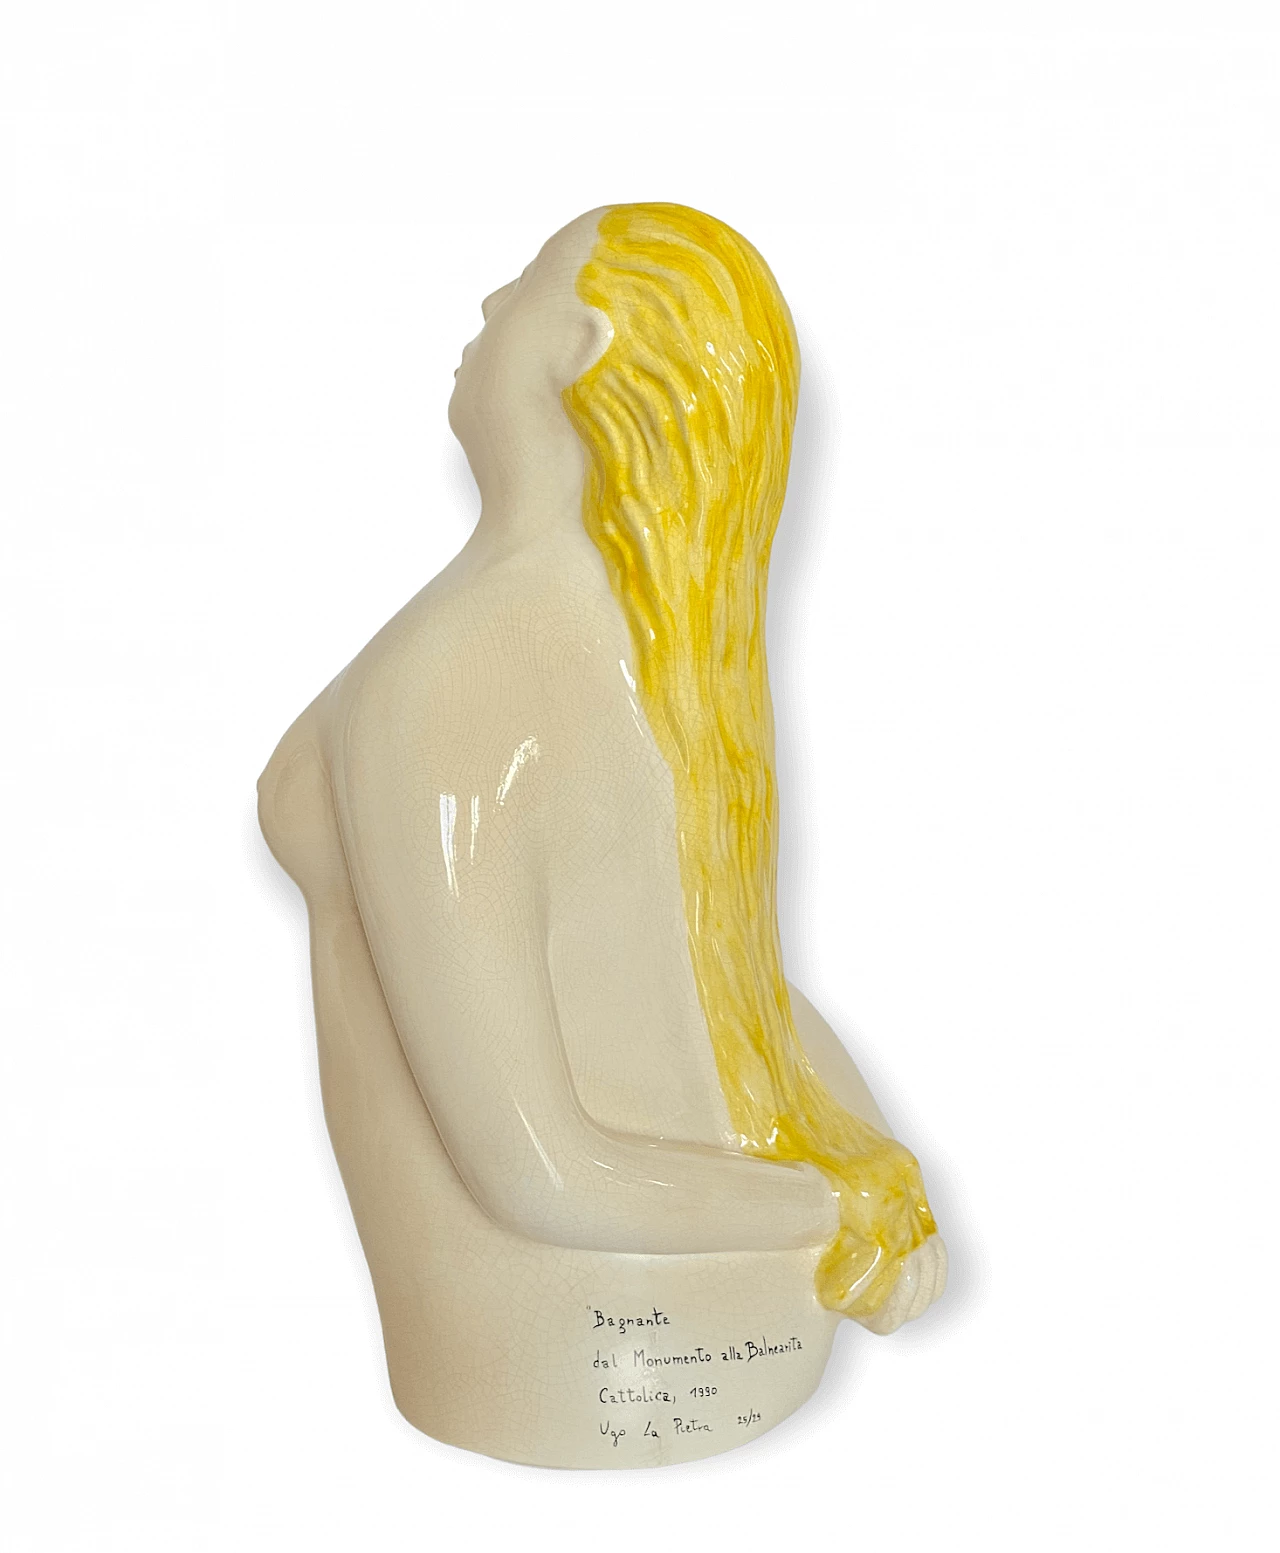 Ugo La Pietra, Bather, glazed ceramic sculpture, 1990 17